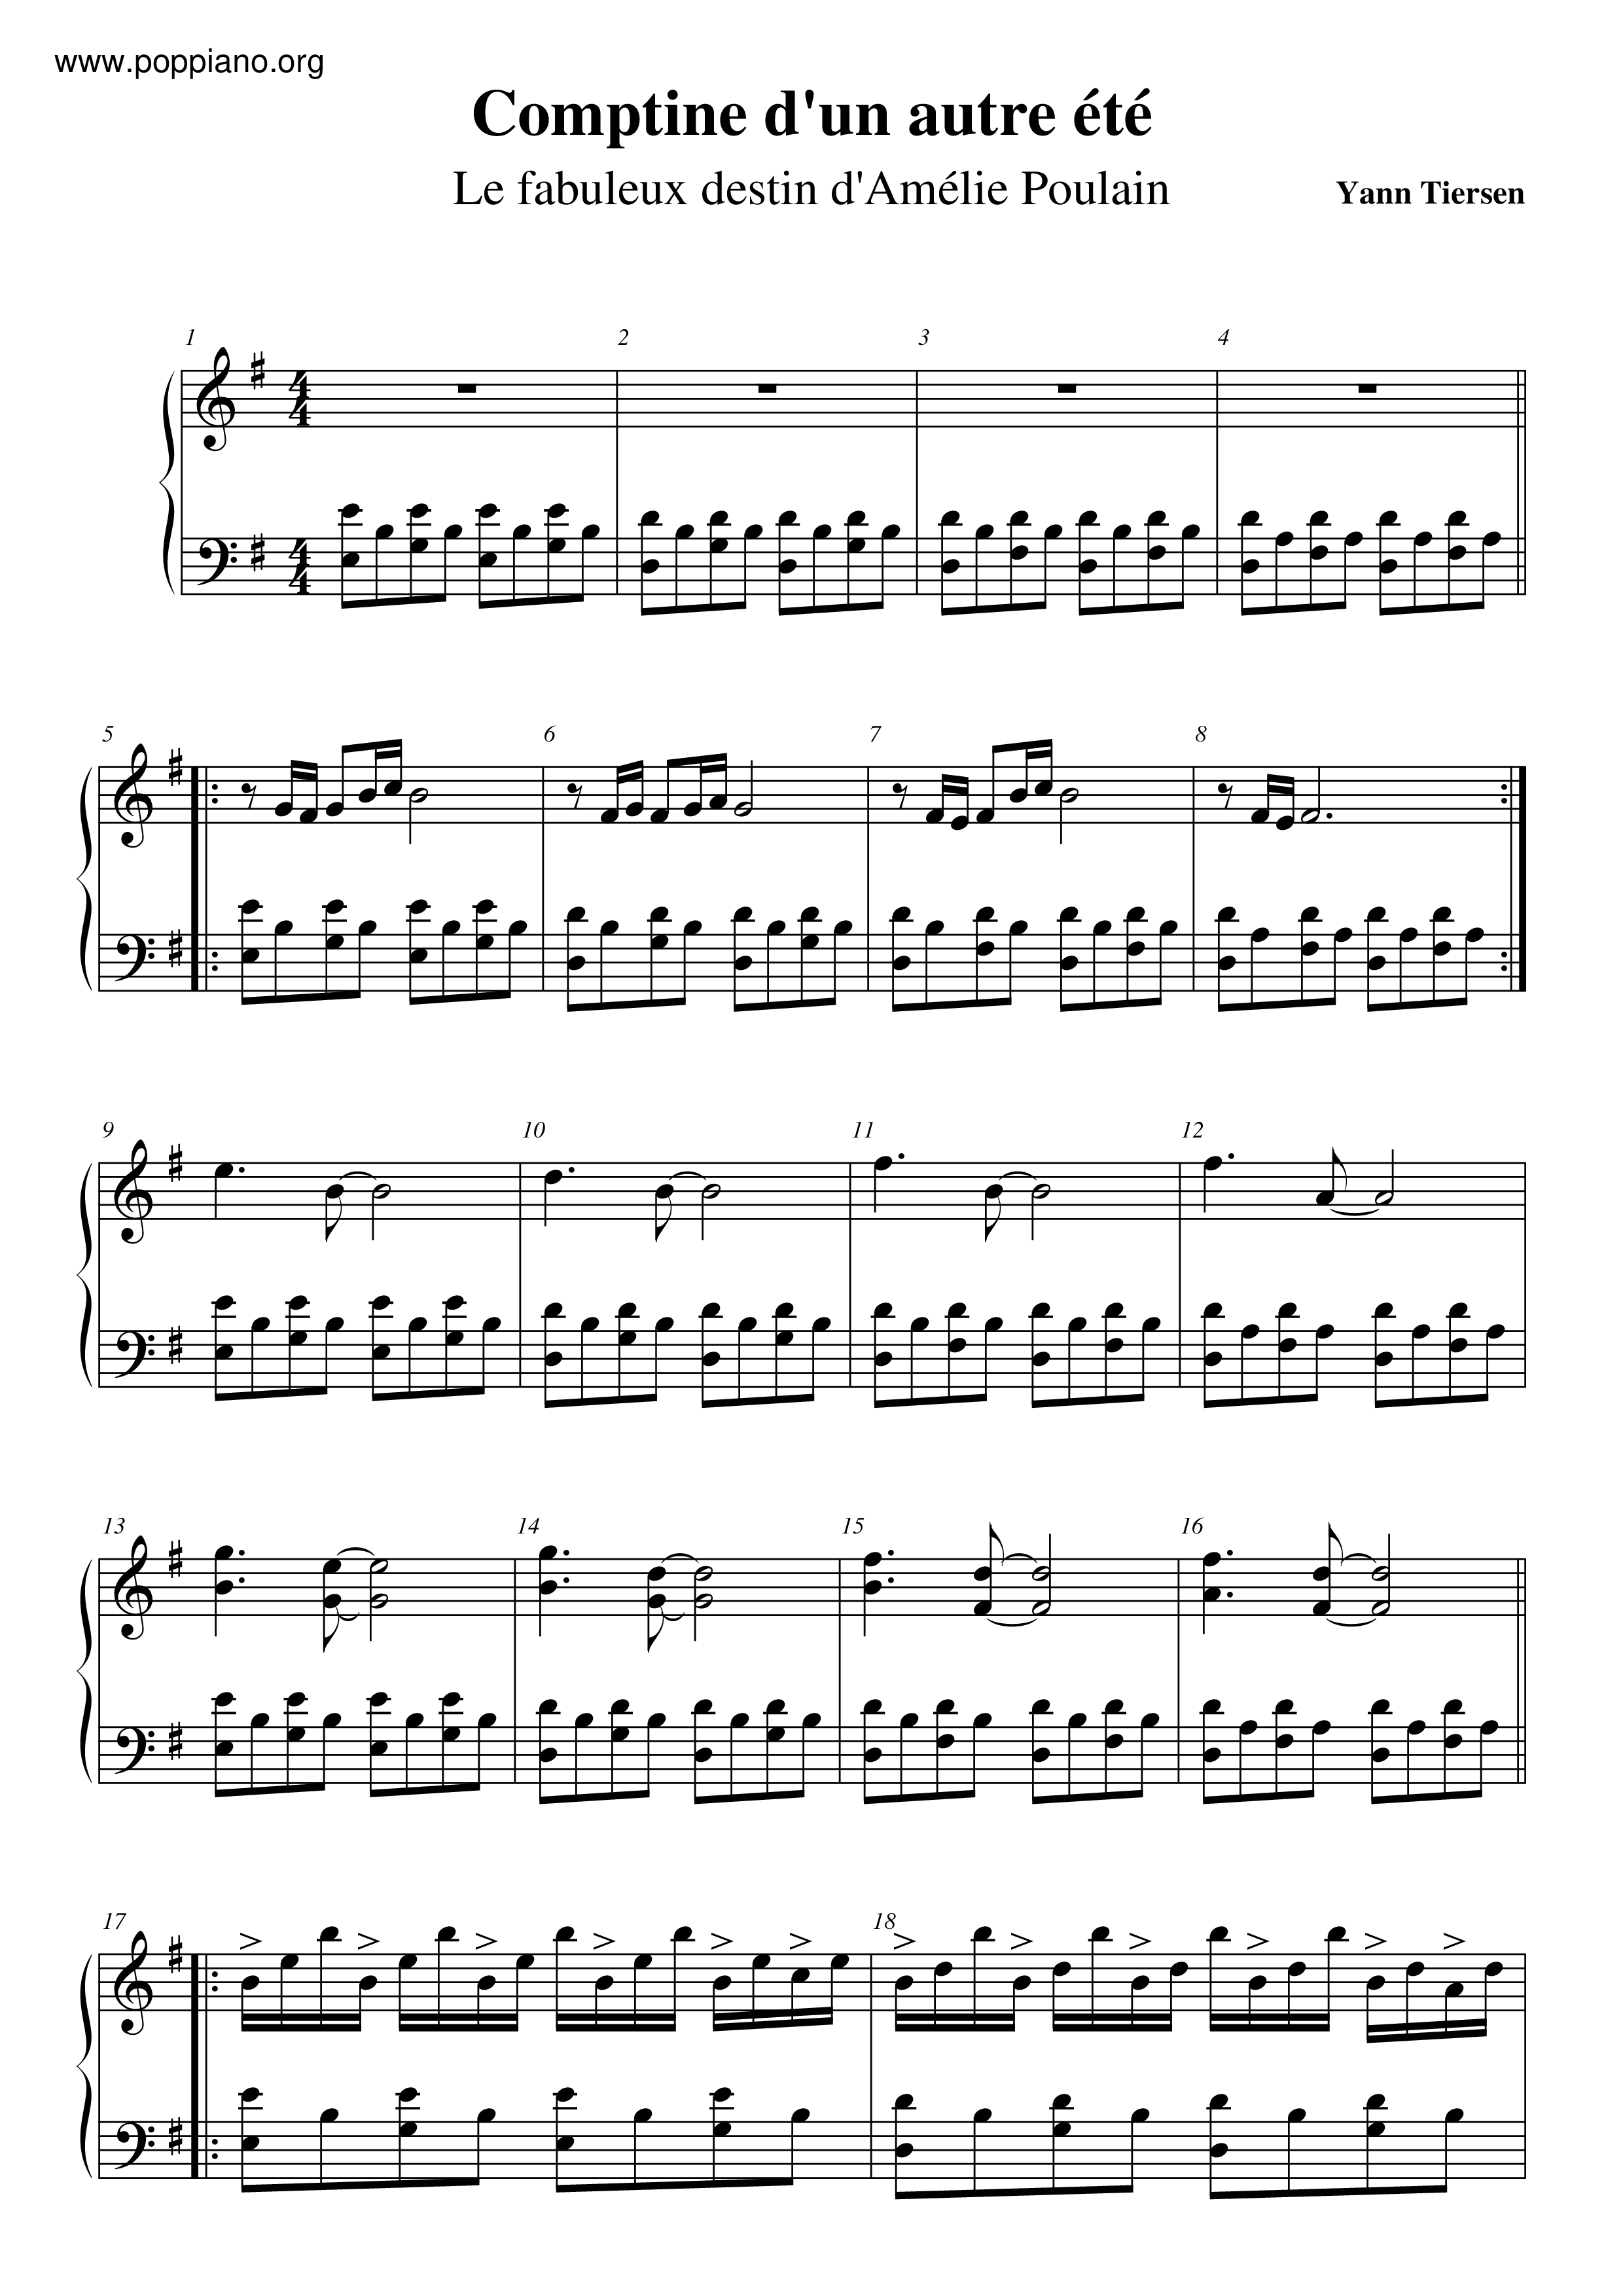 Comptine D'été No.3ピアノ譜